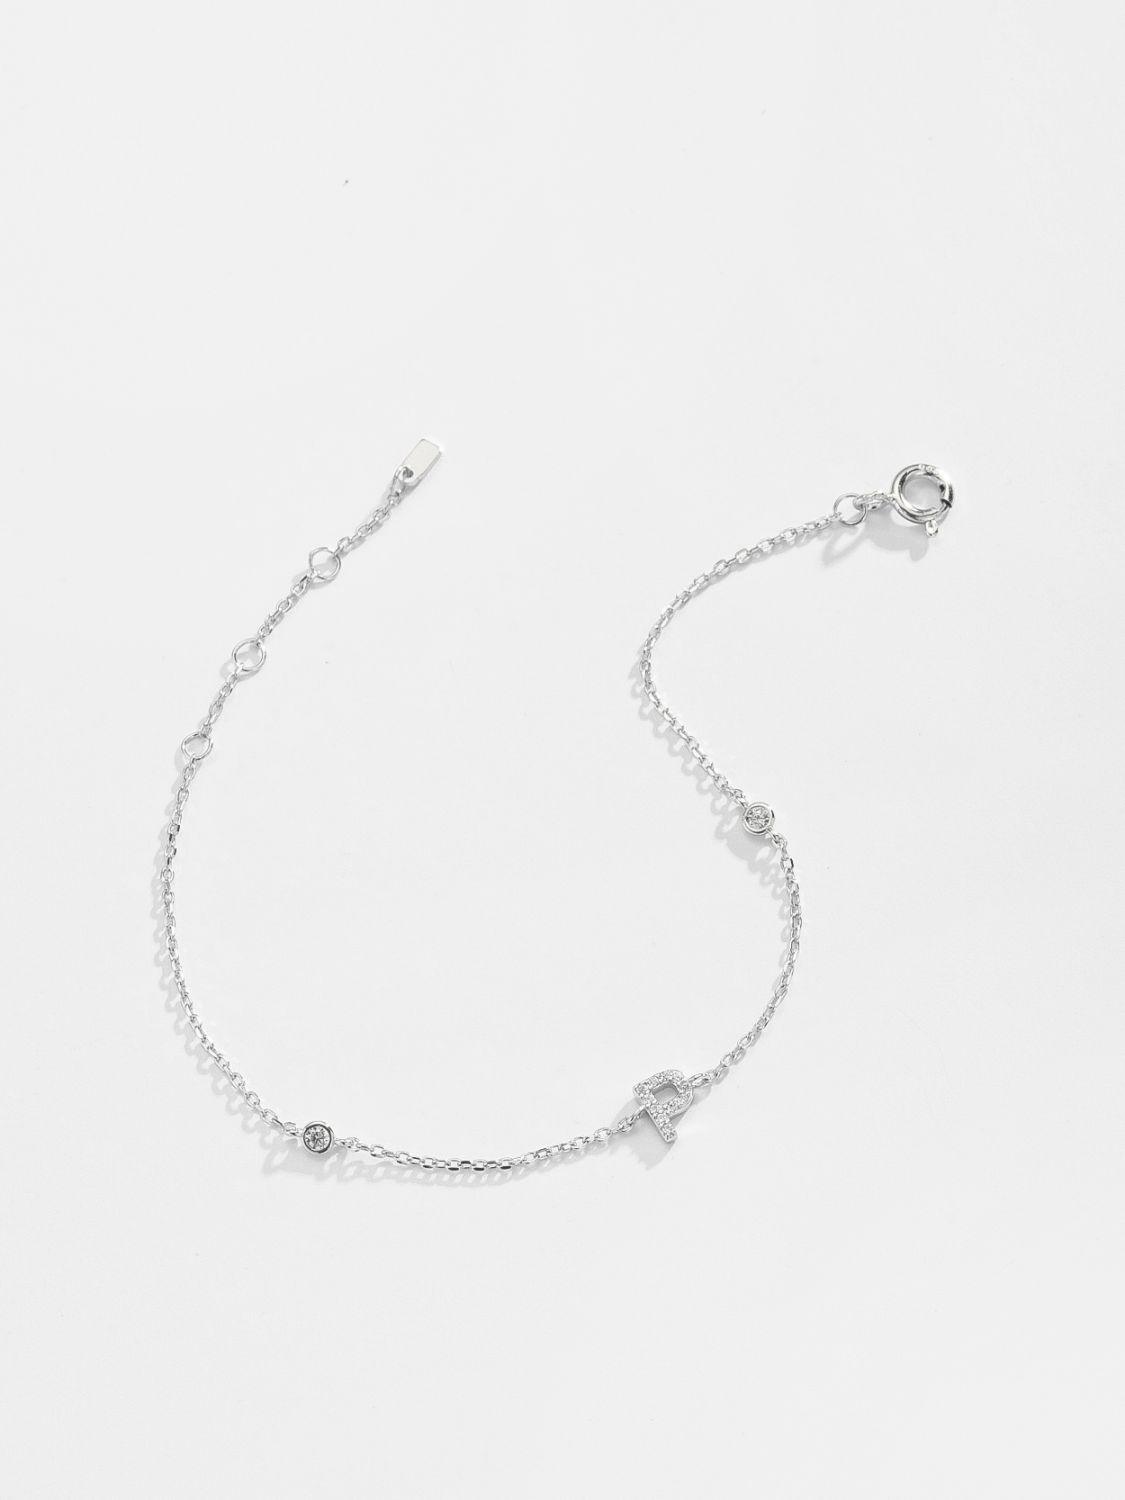 L To P Zircon 925 Sterling Silver Bracelet - Crazy Like a Daisy Boutique